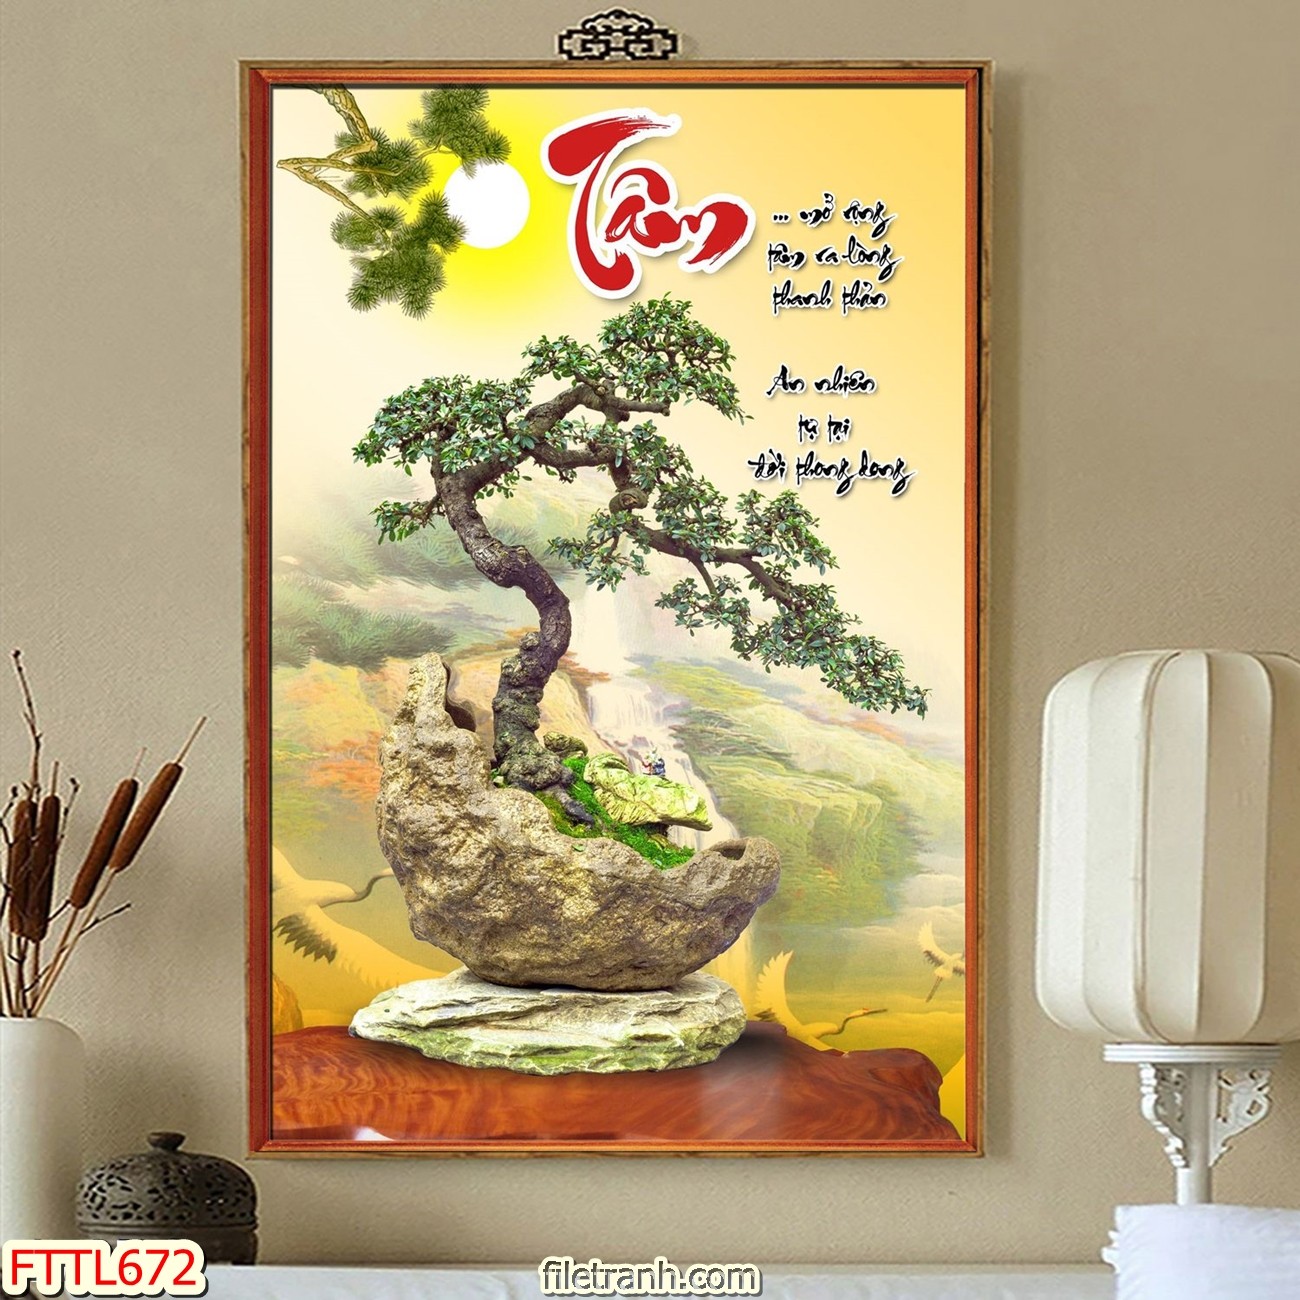 https://filetranh.com/file-tranh-chau-mai-bonsai/file-tranh-chau-mai-bonsai-fttl672.html